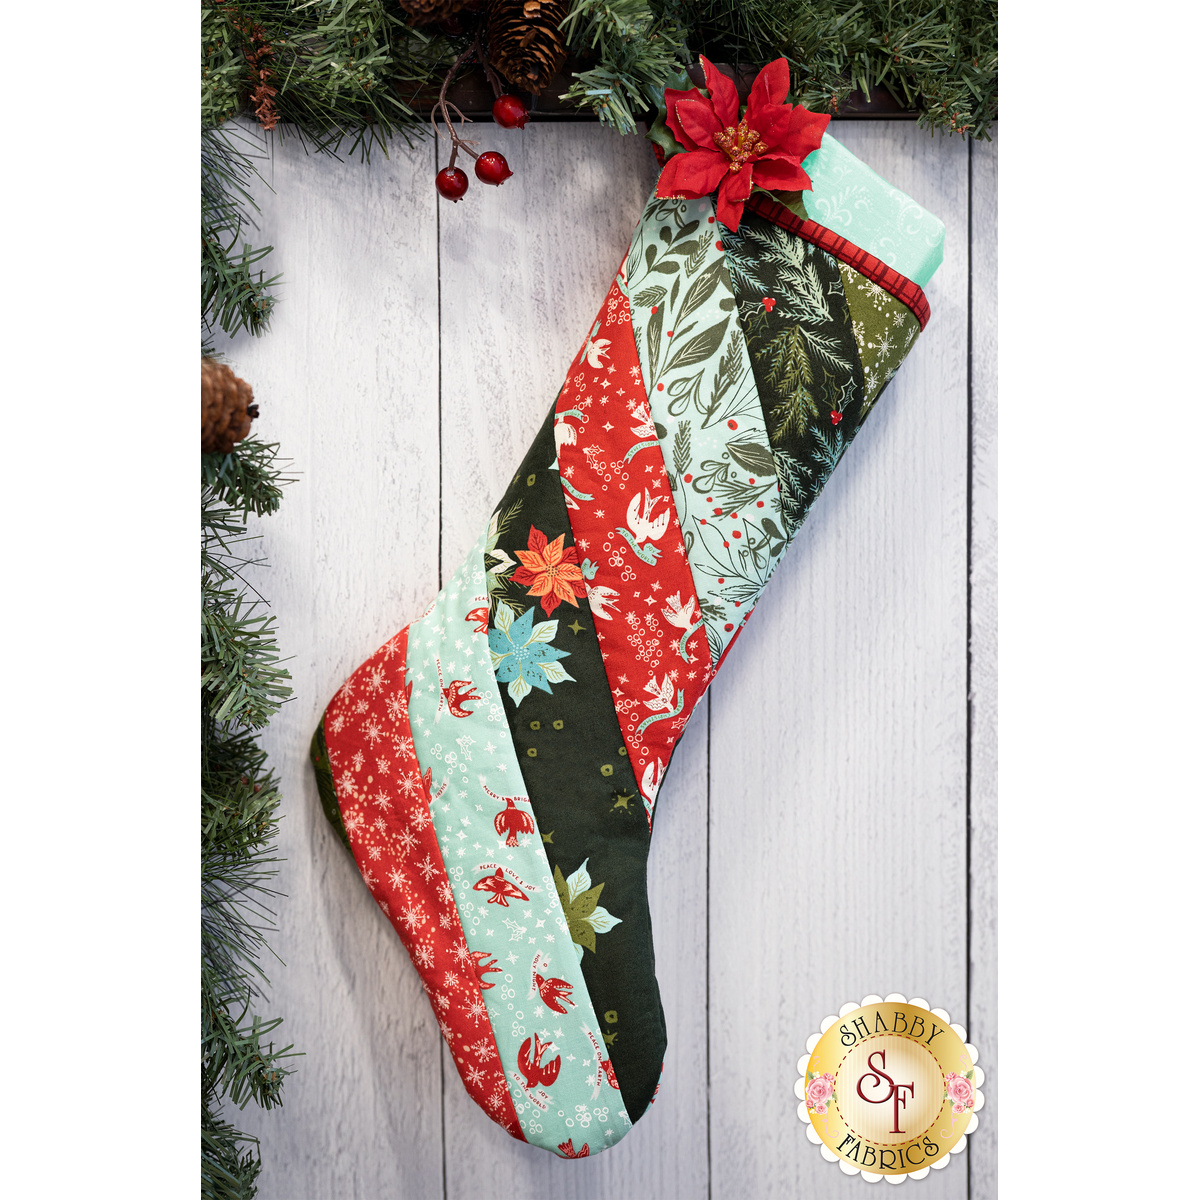 Cosy Christmas Stockings - Tildas World